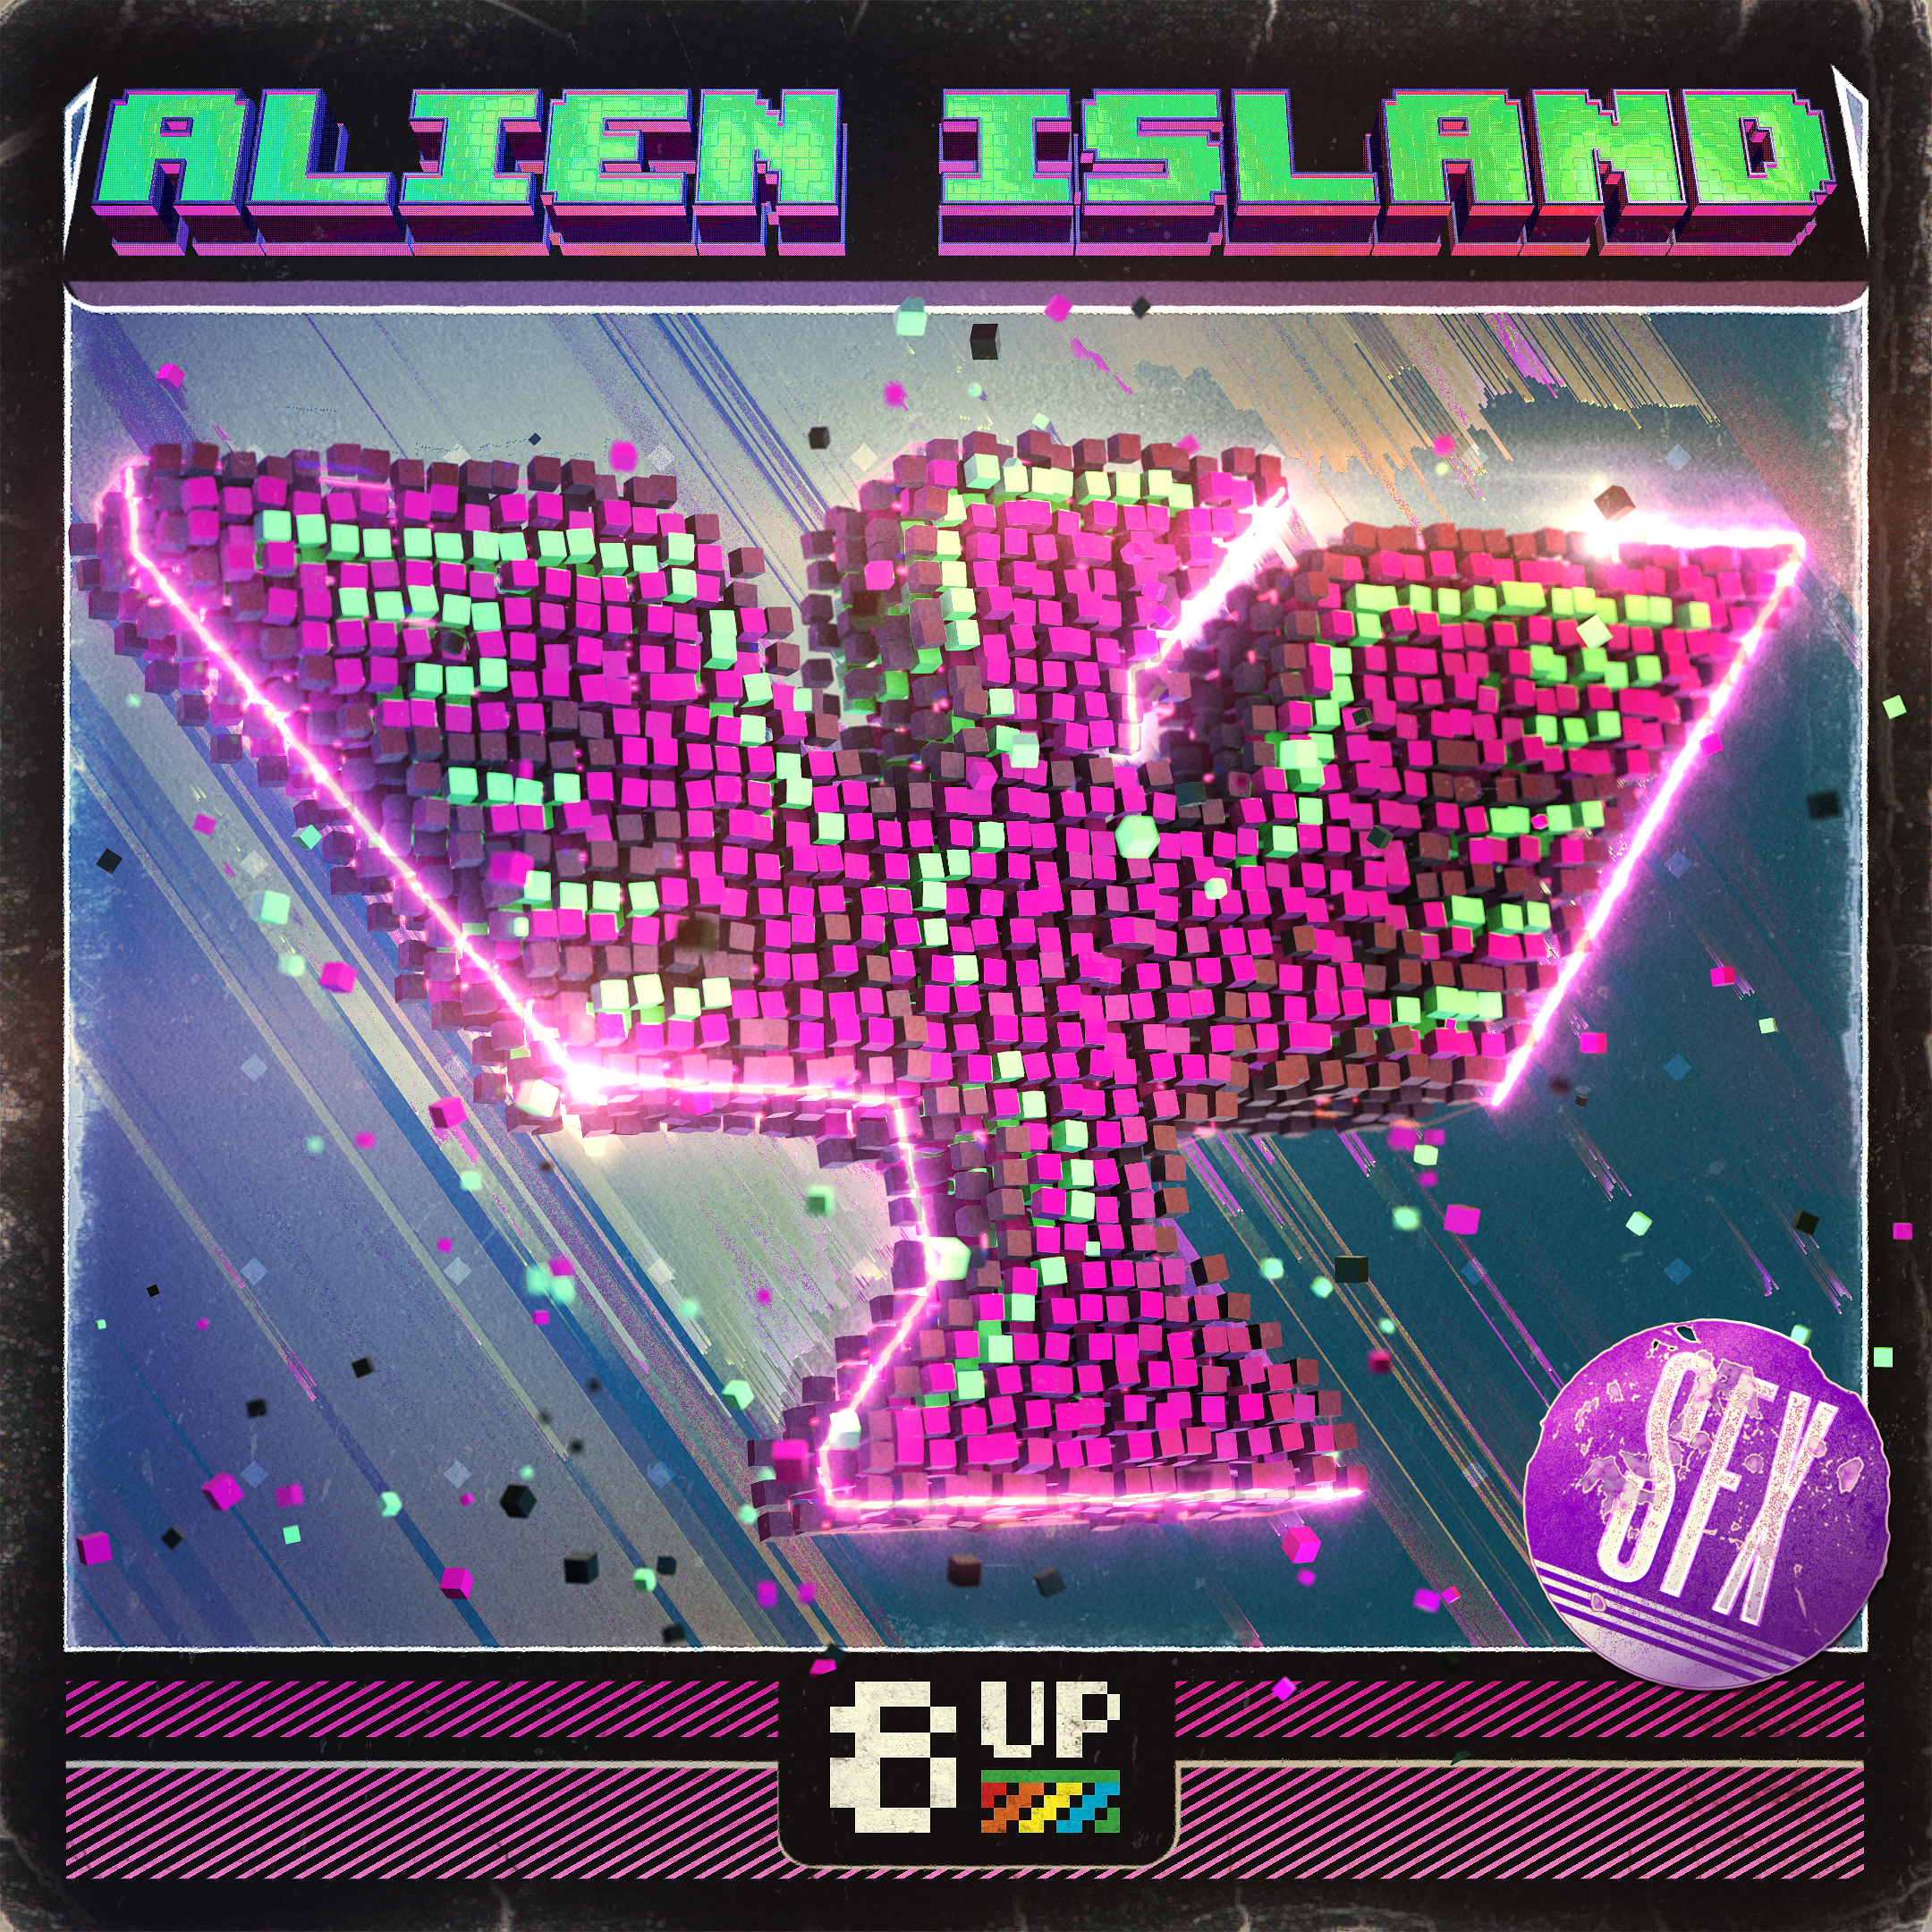 Alien Island Sound Effects Packshot by 8UP